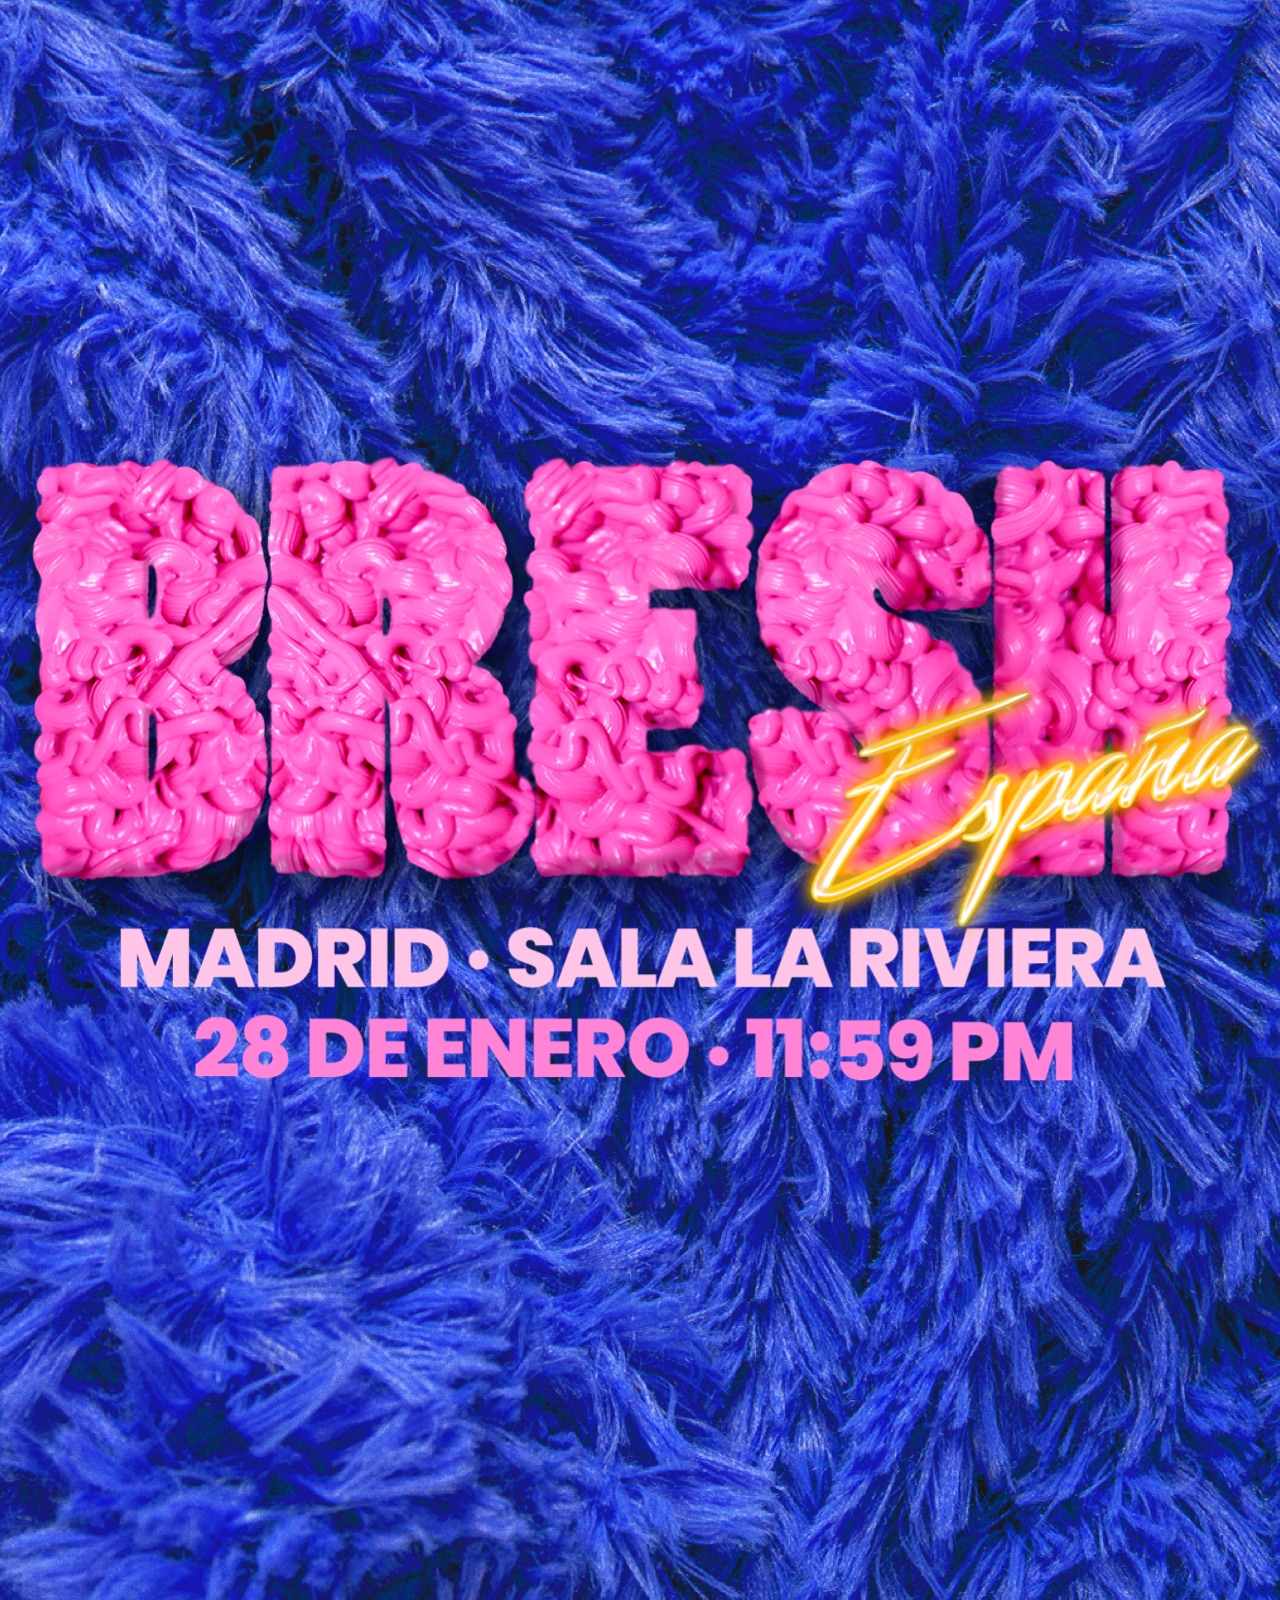 El festival de música Bresh llega por primera vez a España